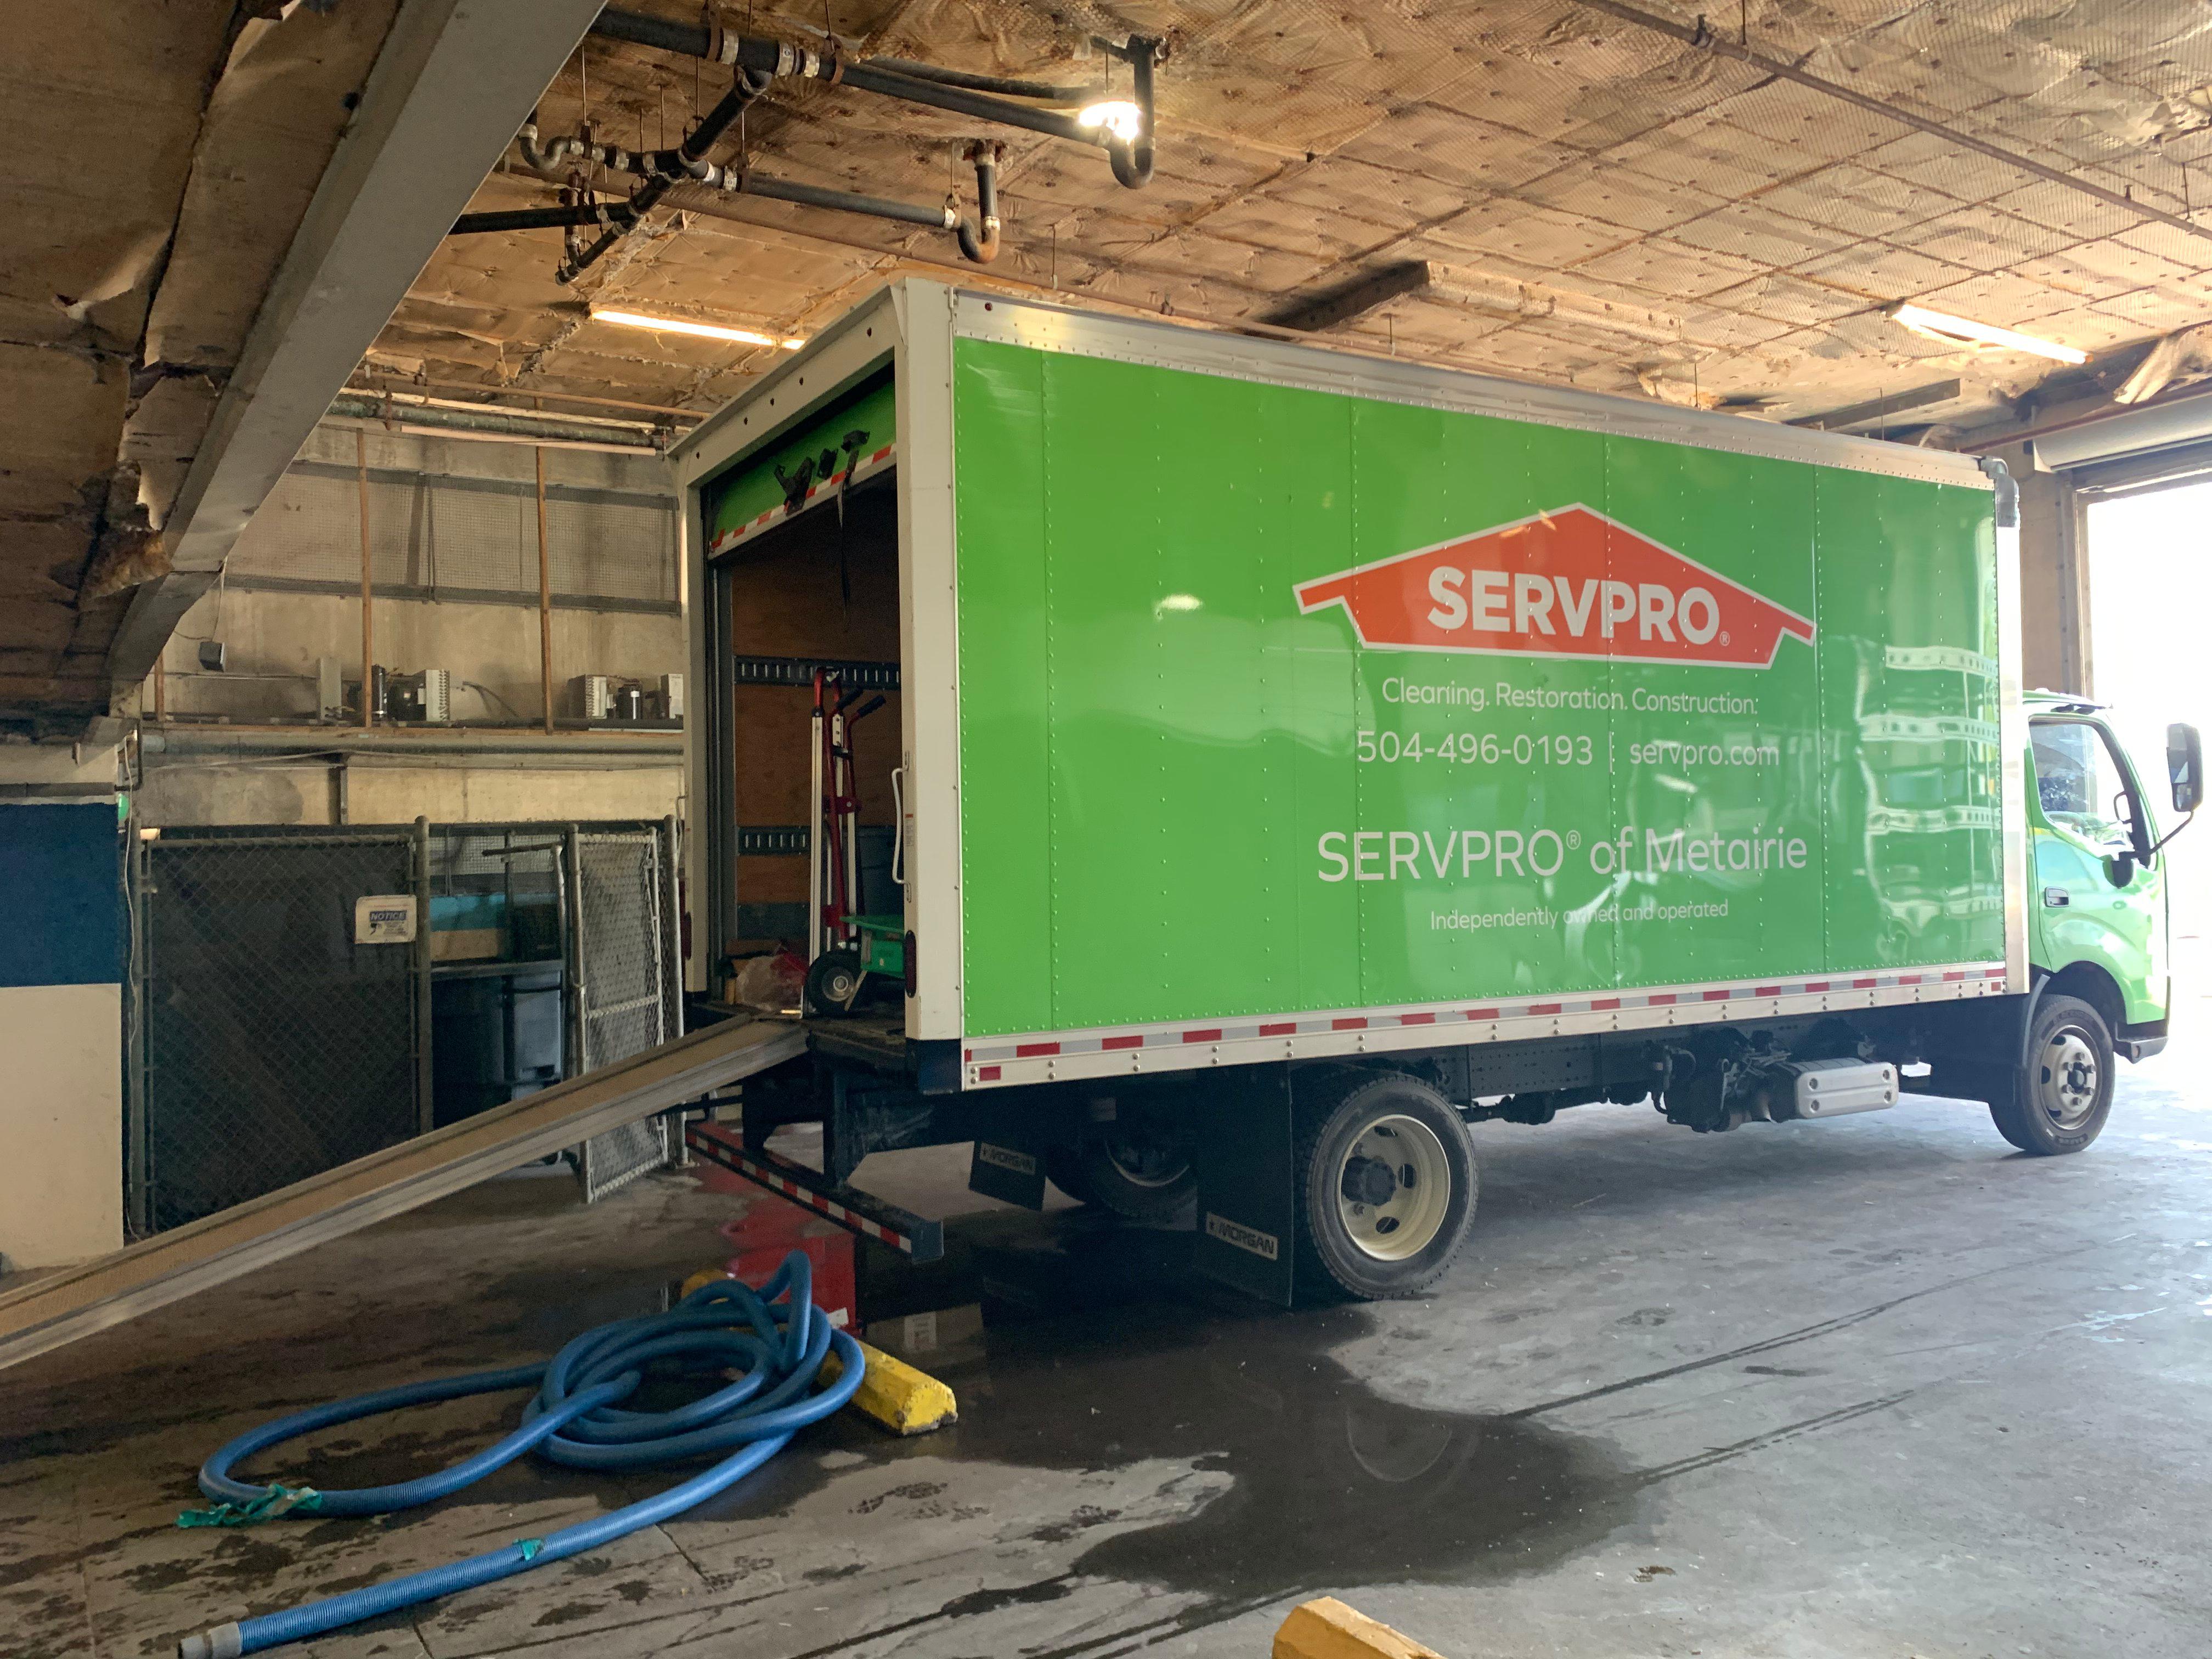 SERVPRO truck in the loading dock preparing to unload equipment.